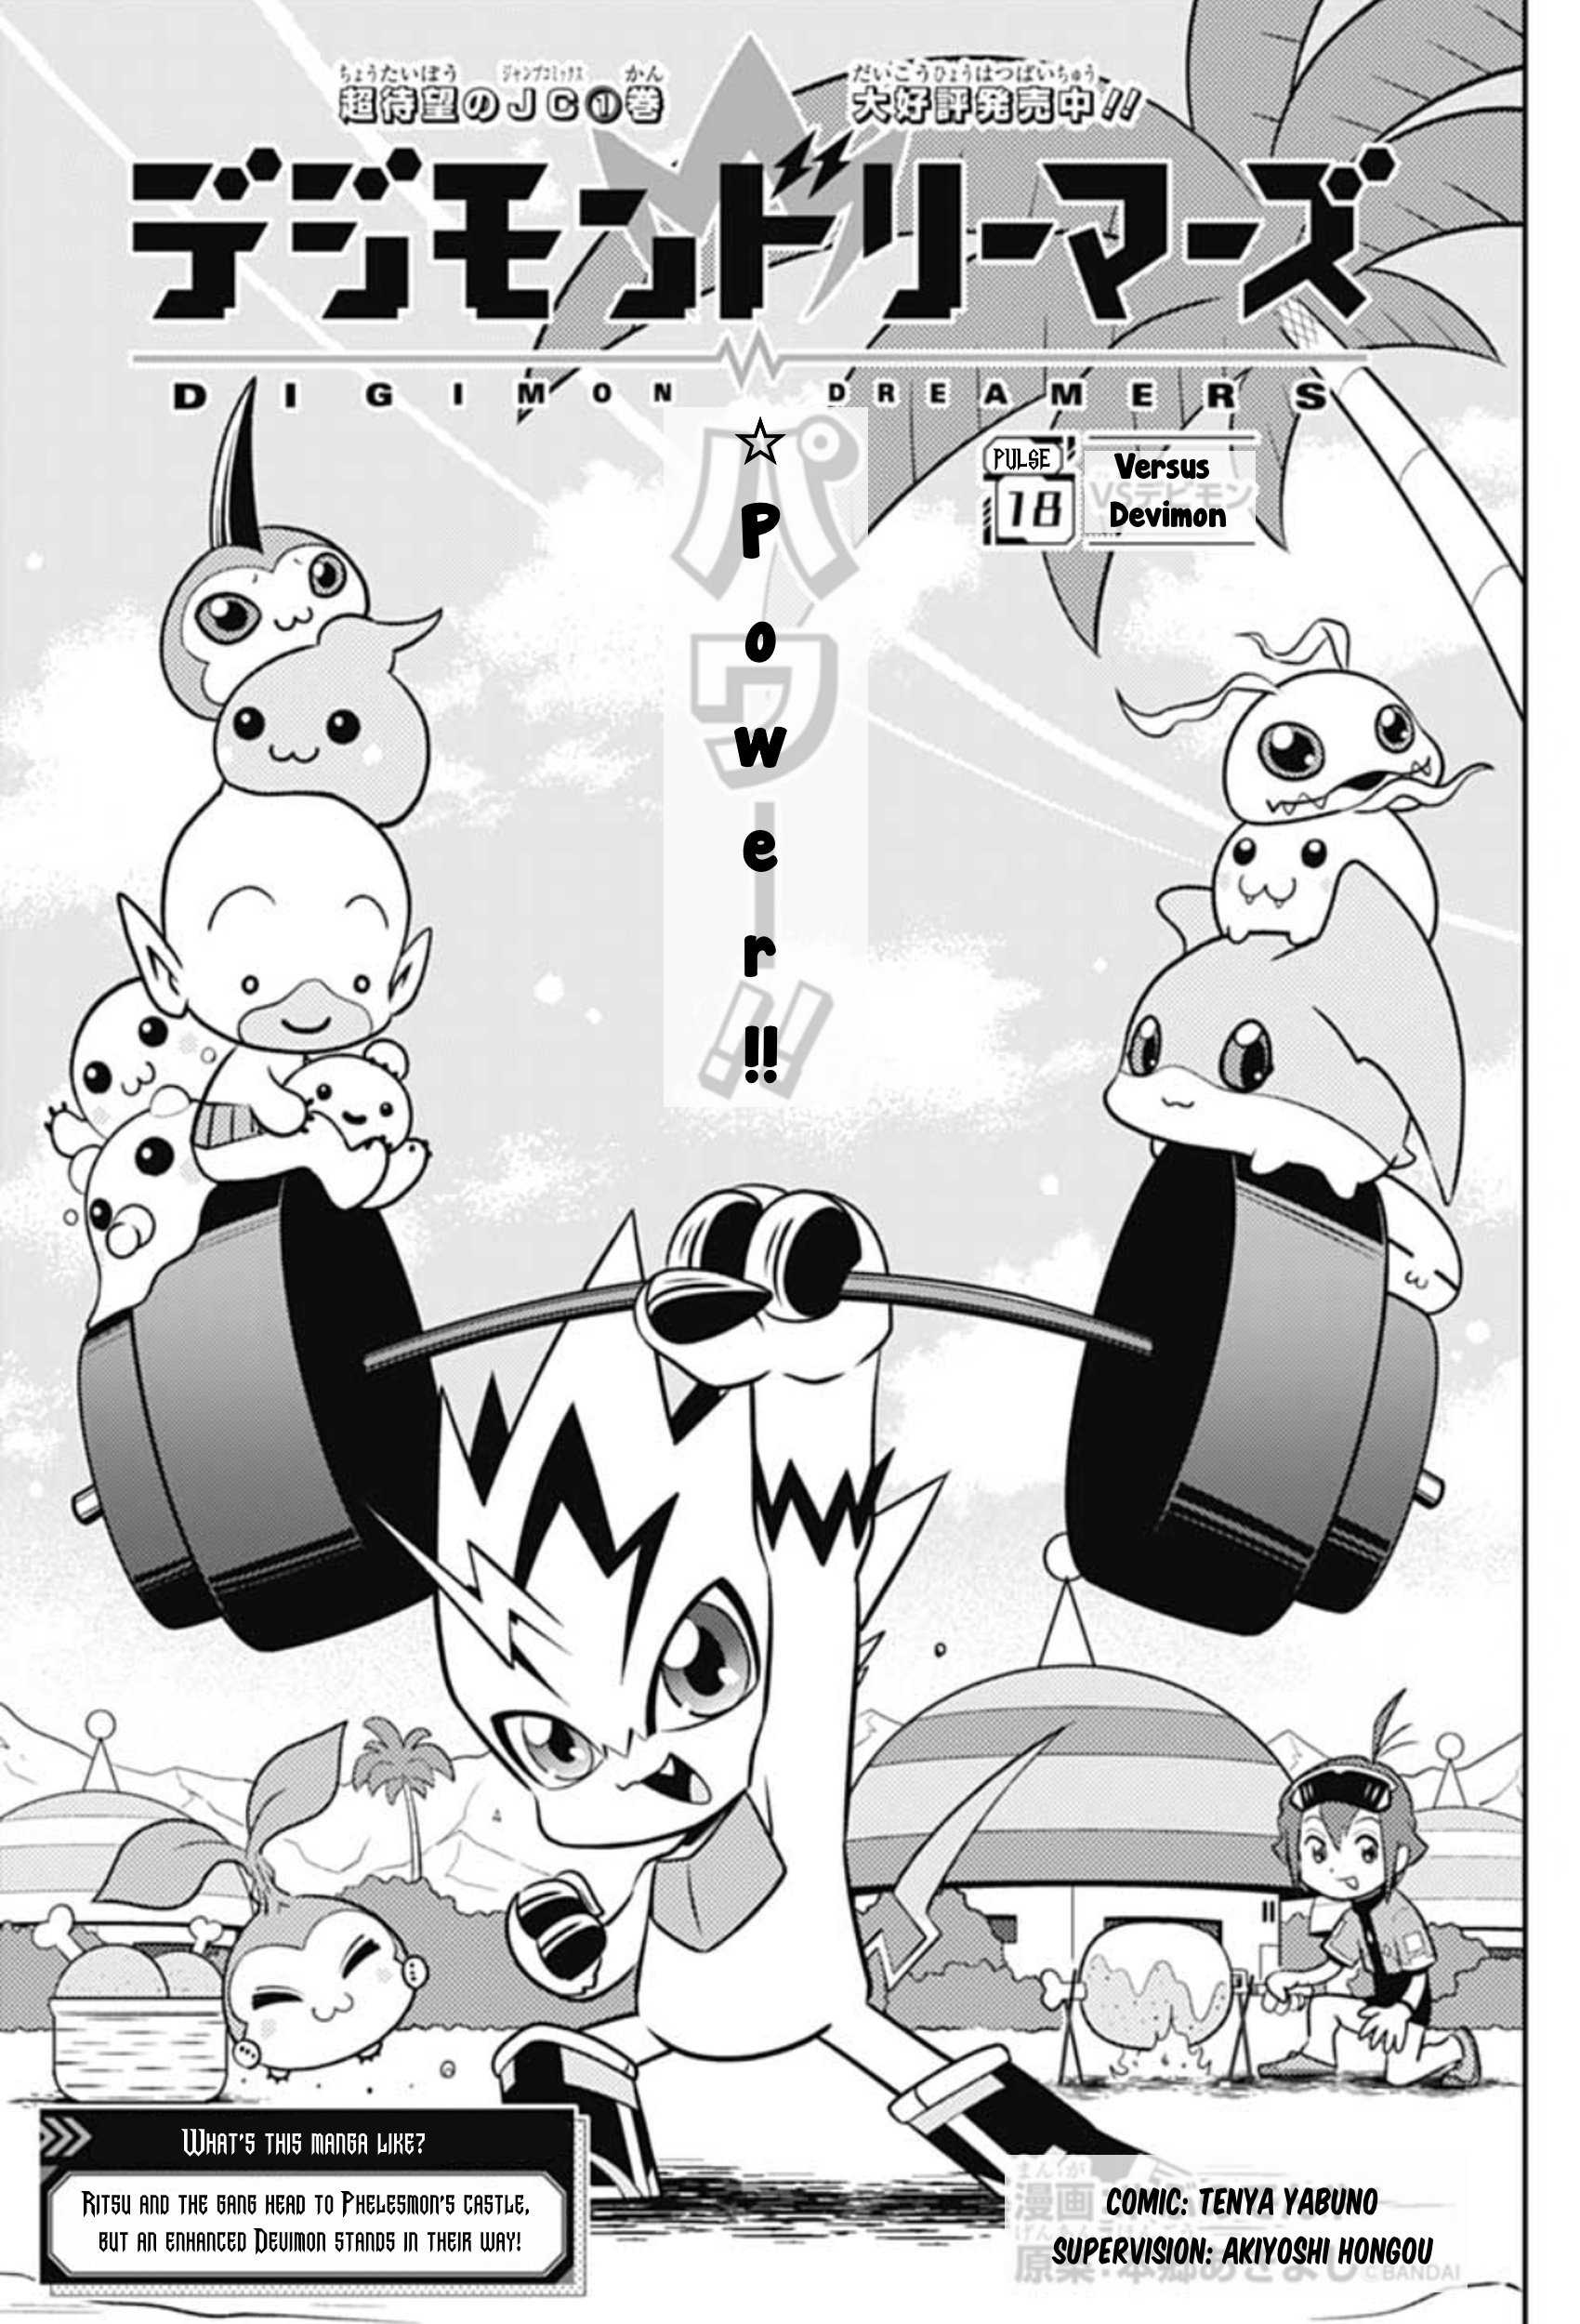 Digimon Dreamers Vol.2 Chapter 18: Versus Devimon - Picture 3